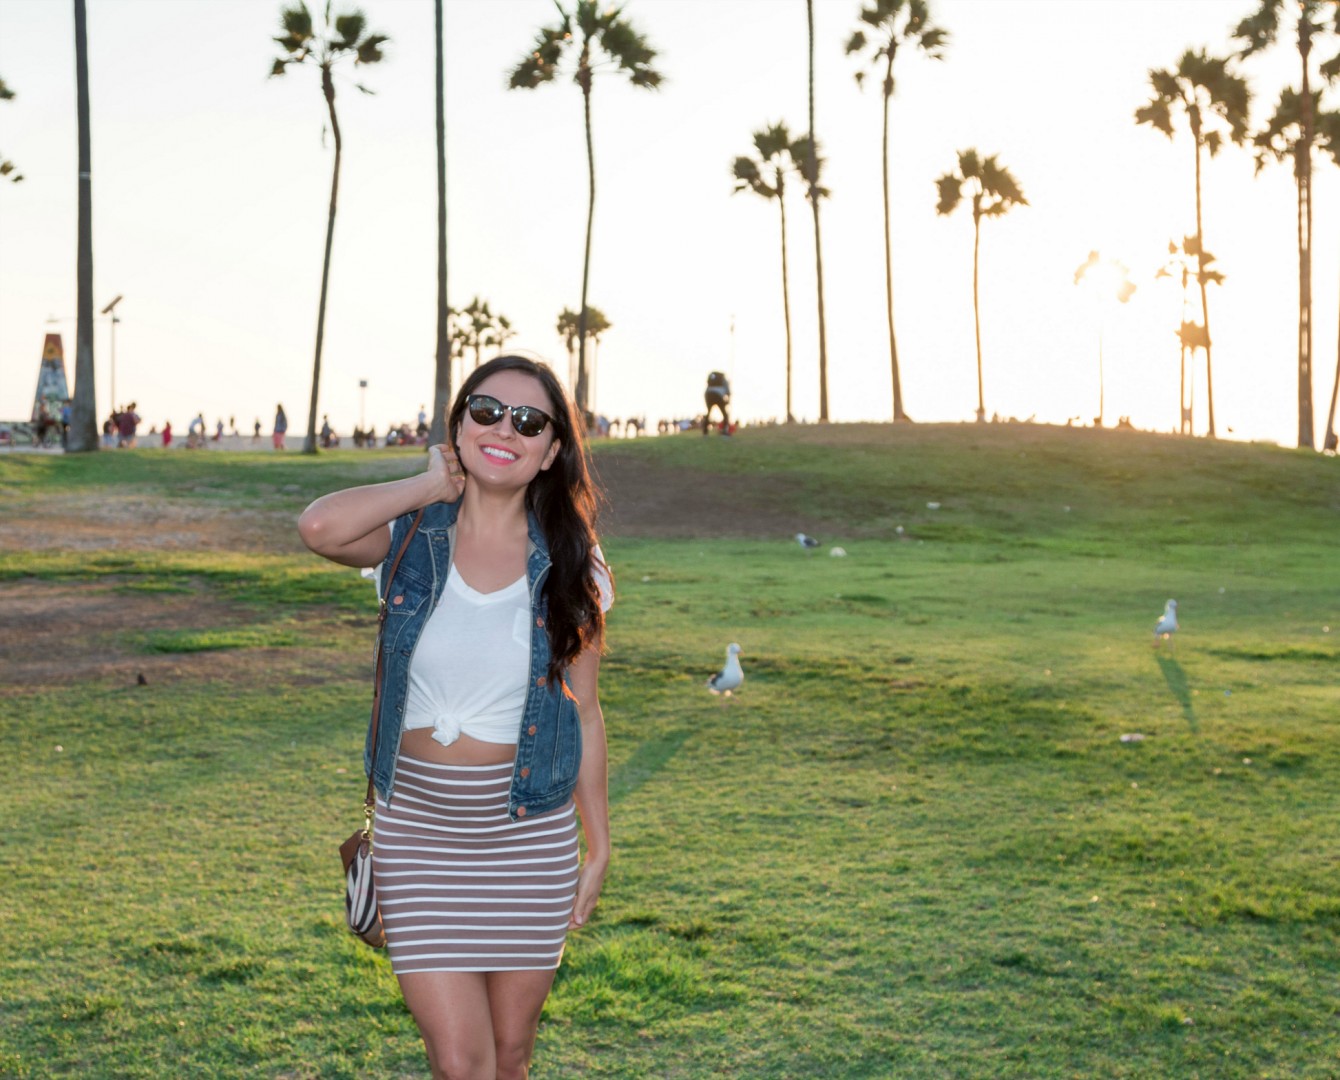 Maui Jim Sunglasses Review - Stephanie Be in Venice Beach, California | Travel-Break.net